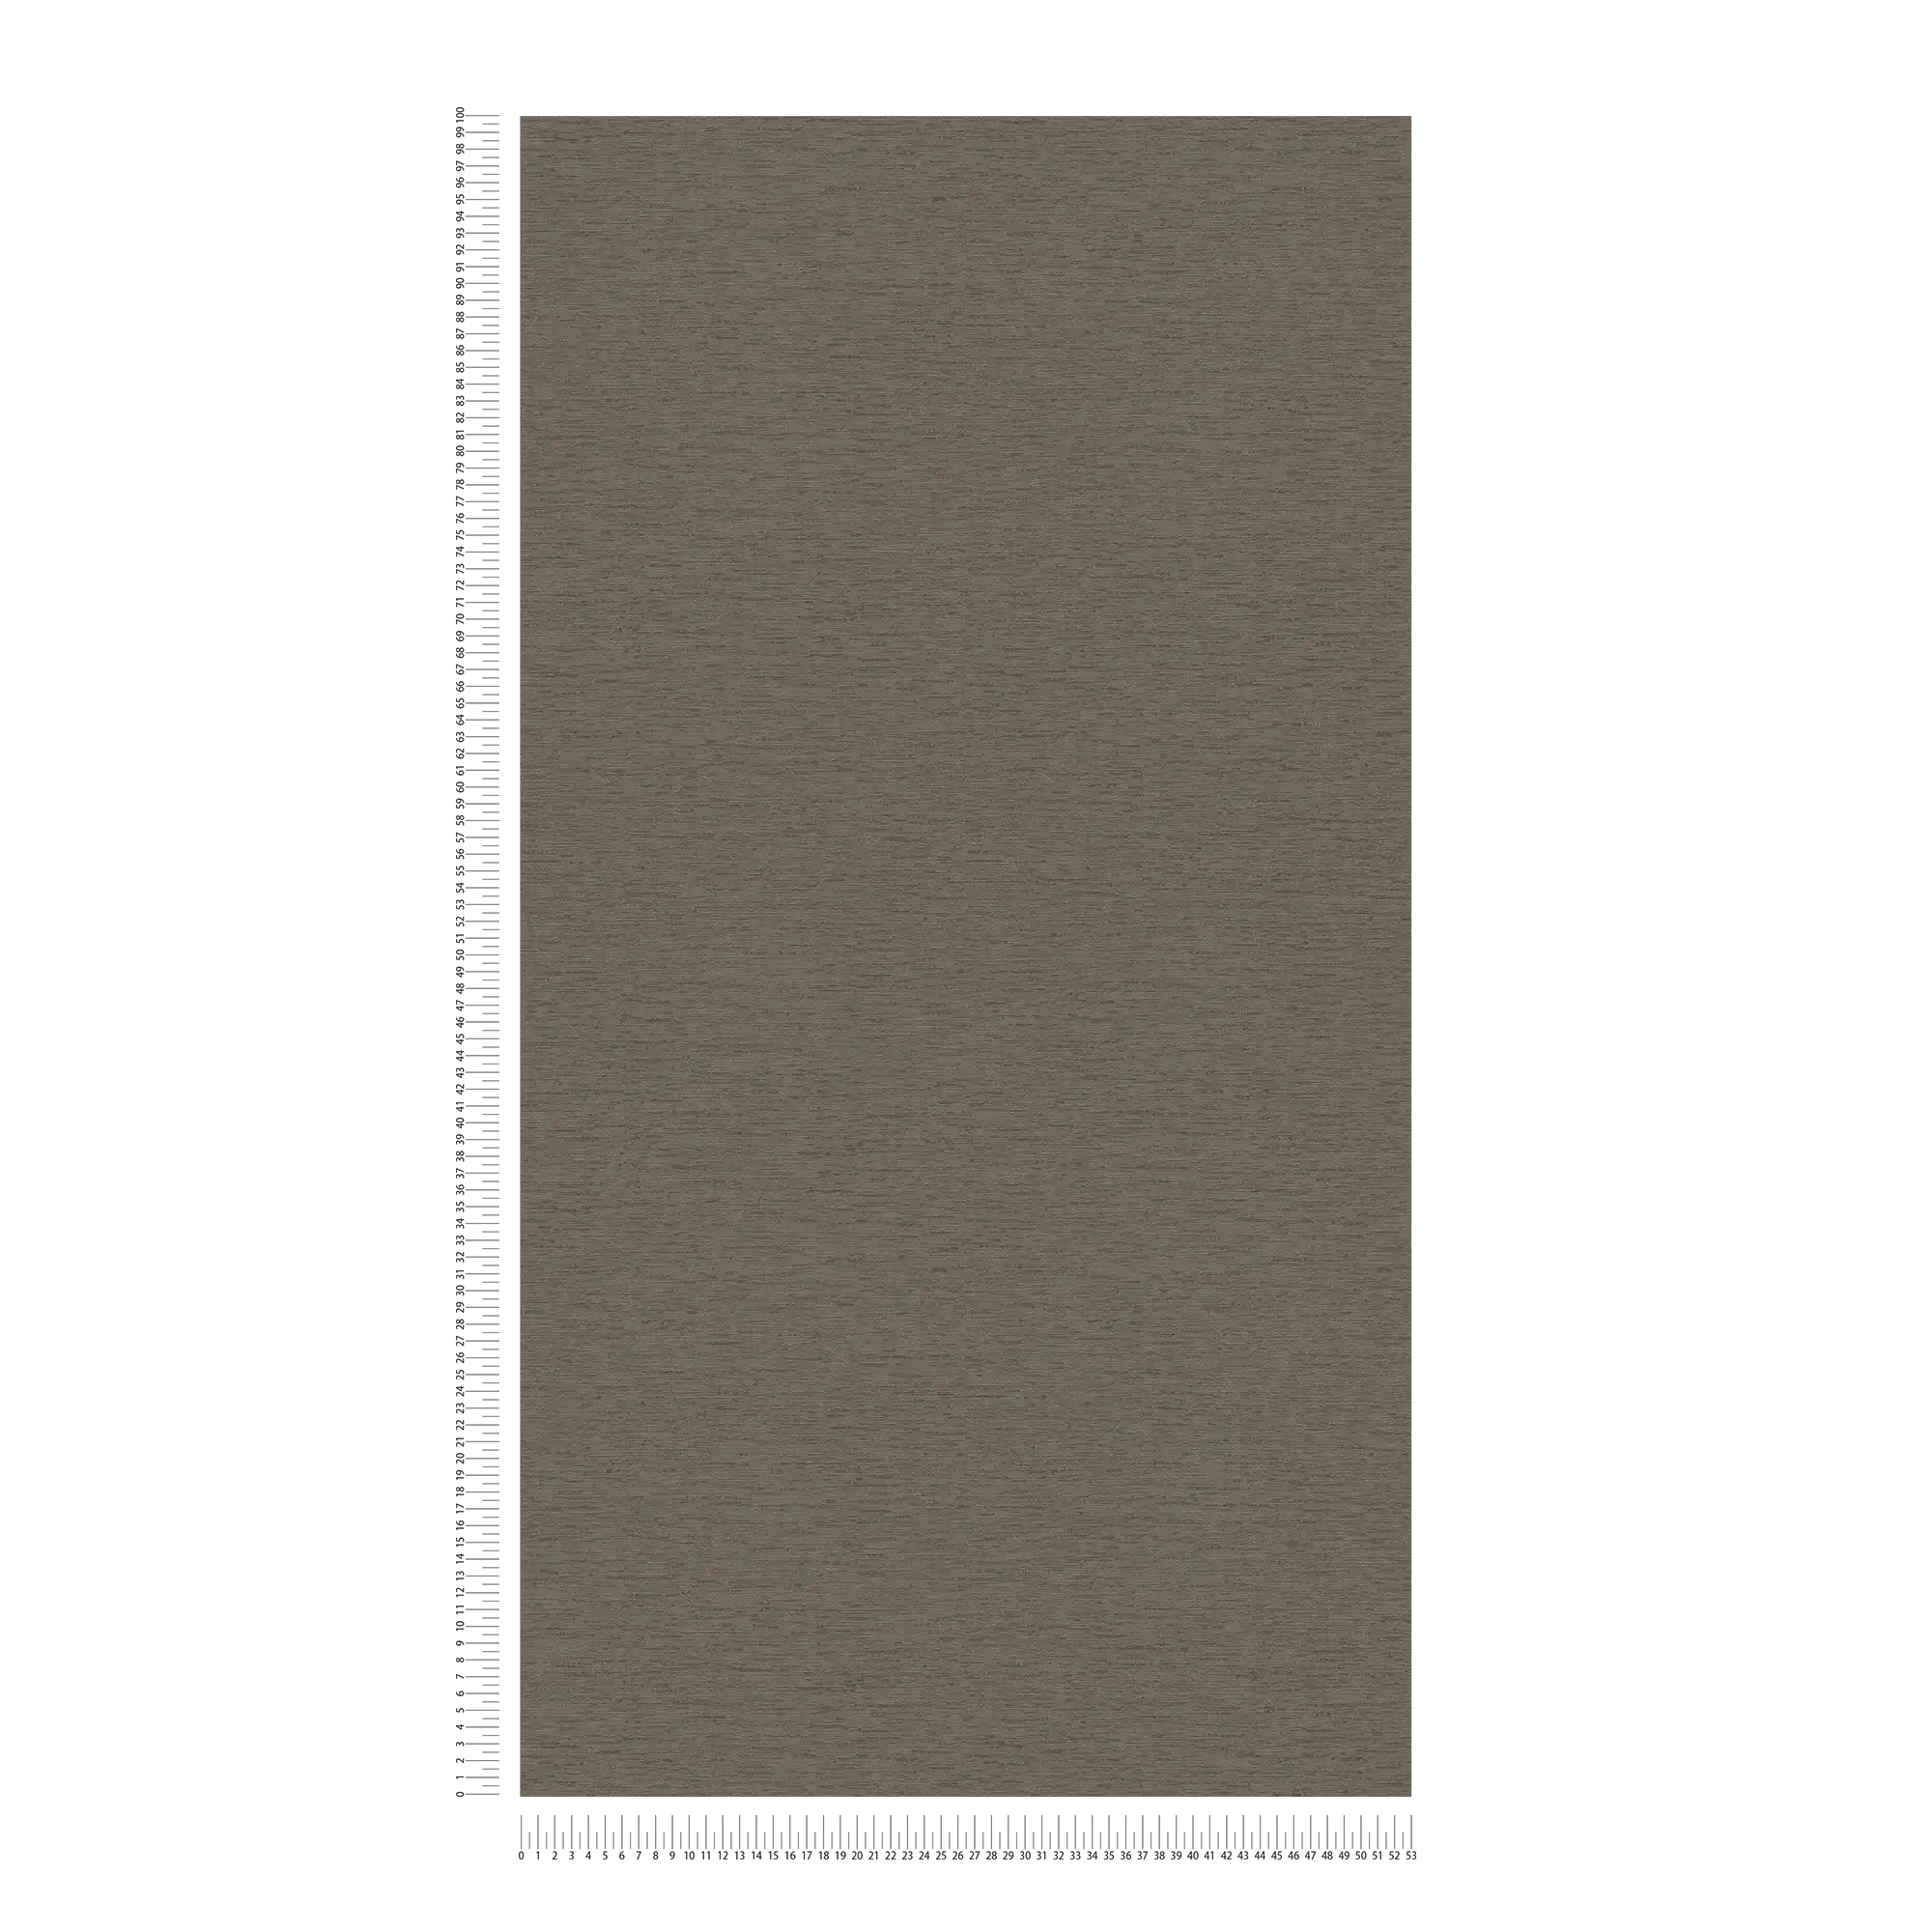             Plain wallpaper in fabric look with light structure, matt - brown
        